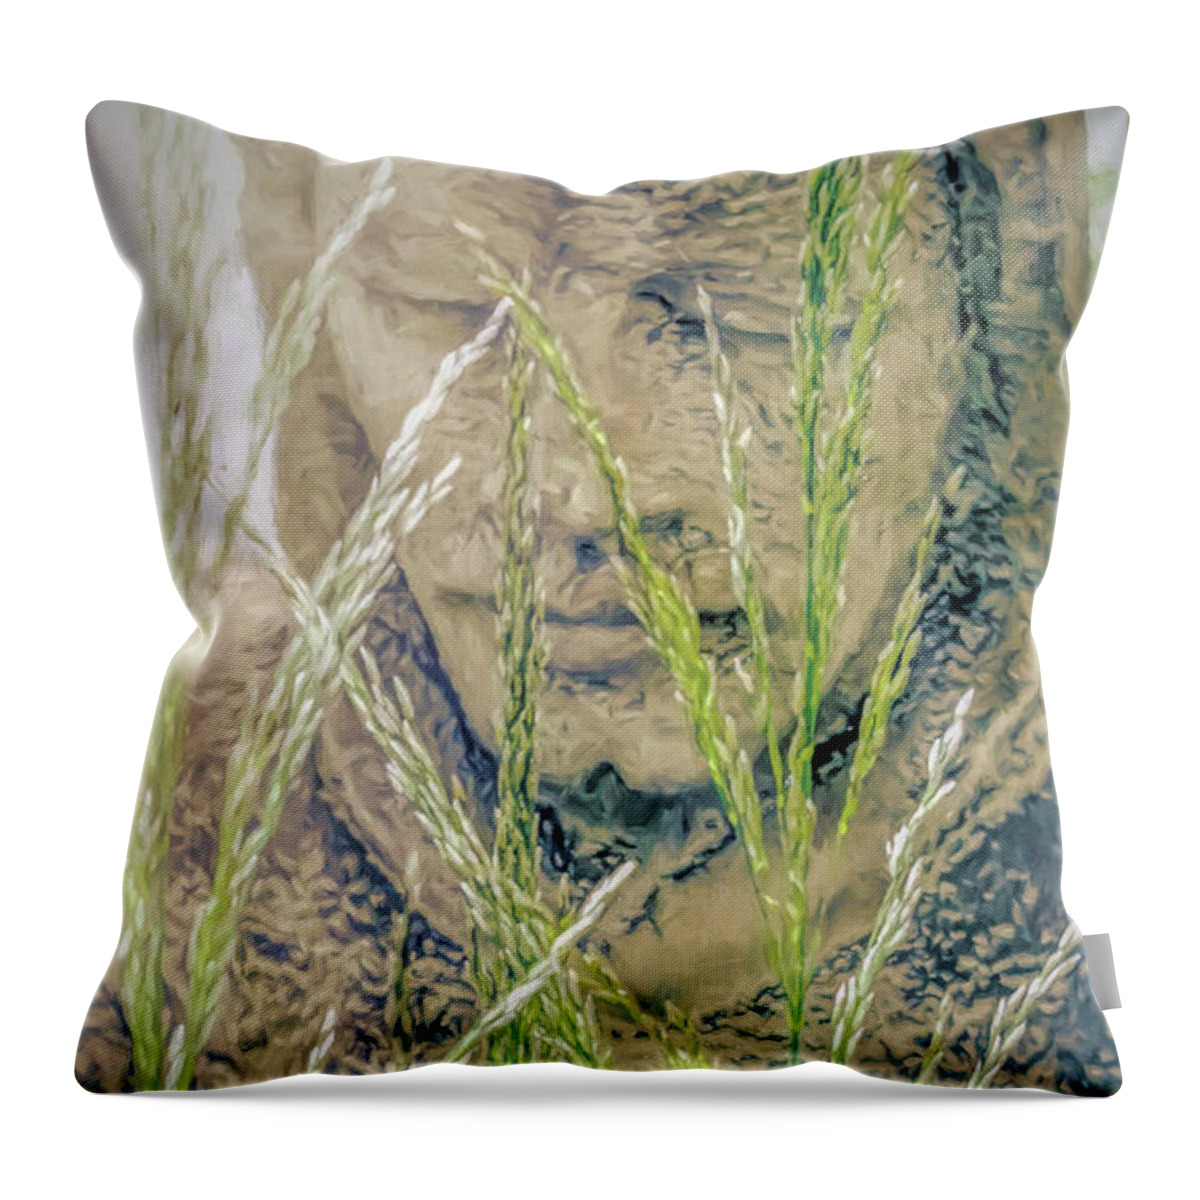 Saint Throw Pillow featuring the digital art St Francis by Jean OKeeffe Macro Abundance Art